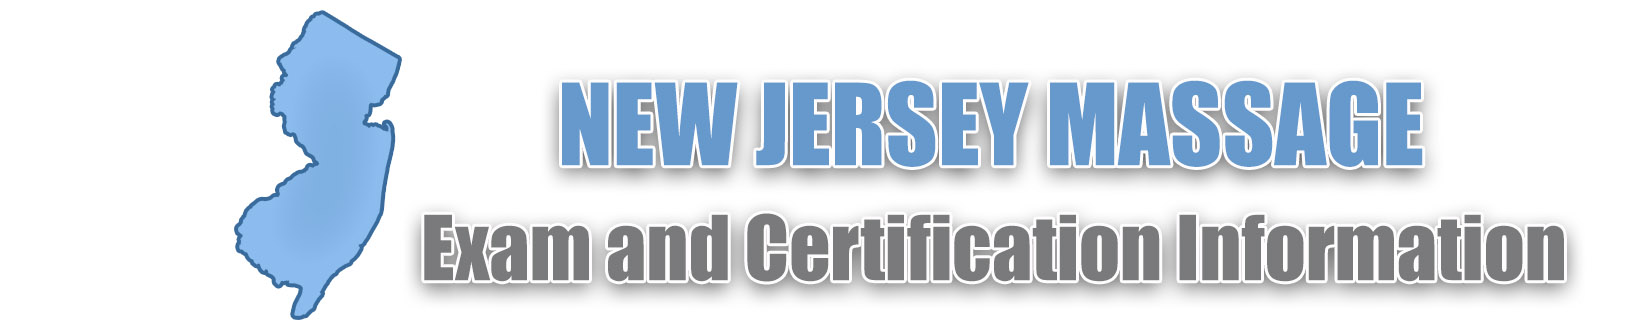 New Jersey MBLEX Massage Exam and Certification Information